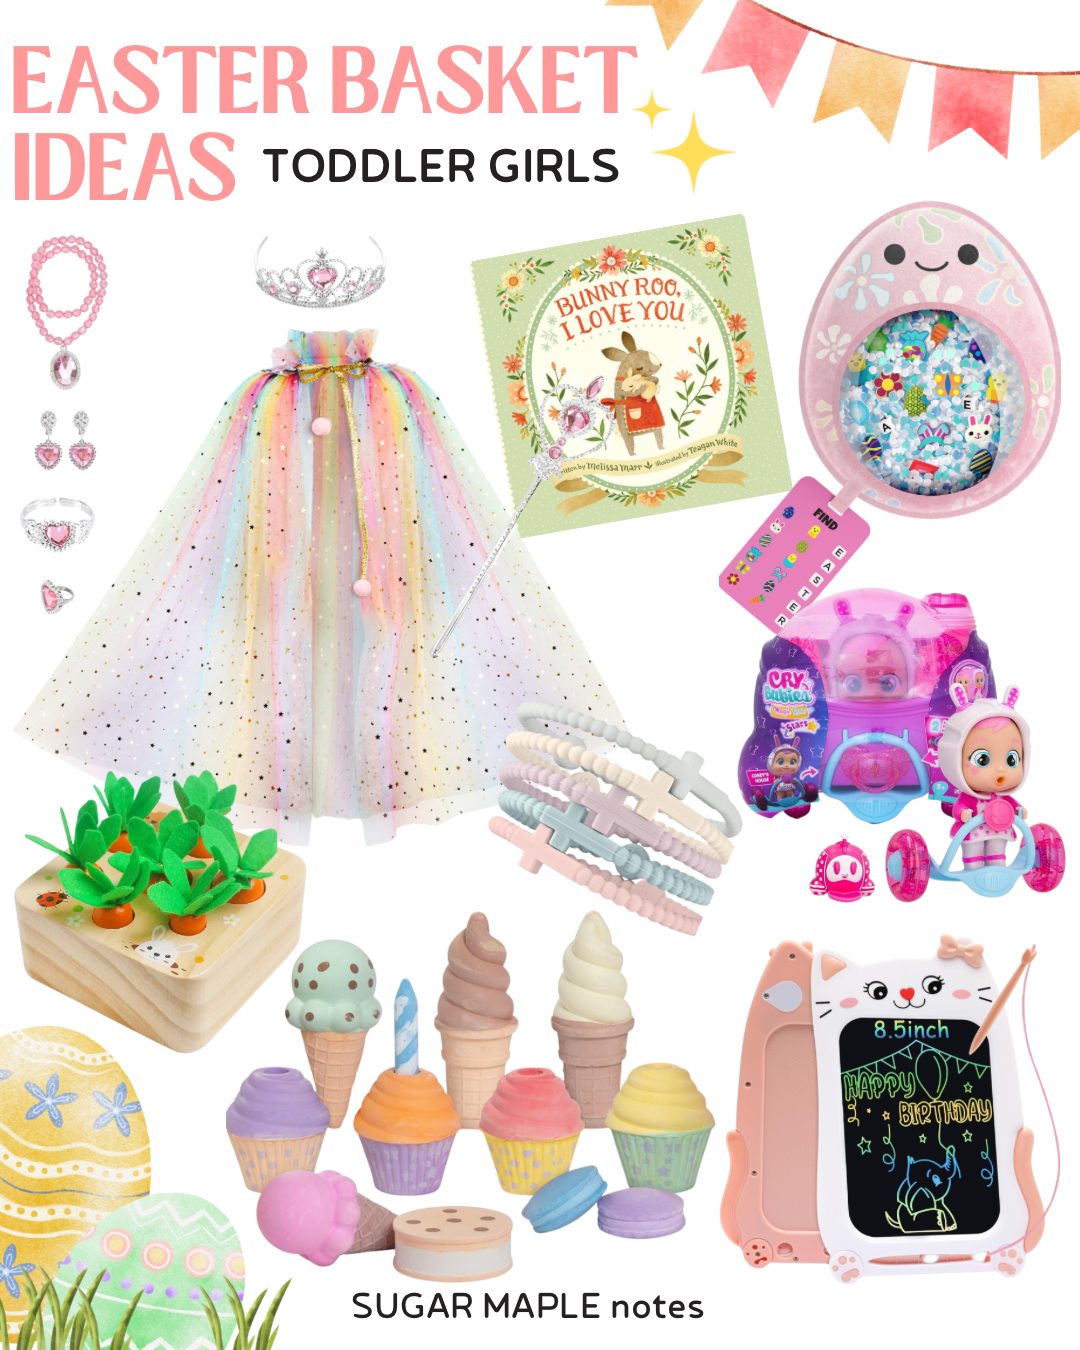 Easter Basket Ideas for Toddler Girls Amazon